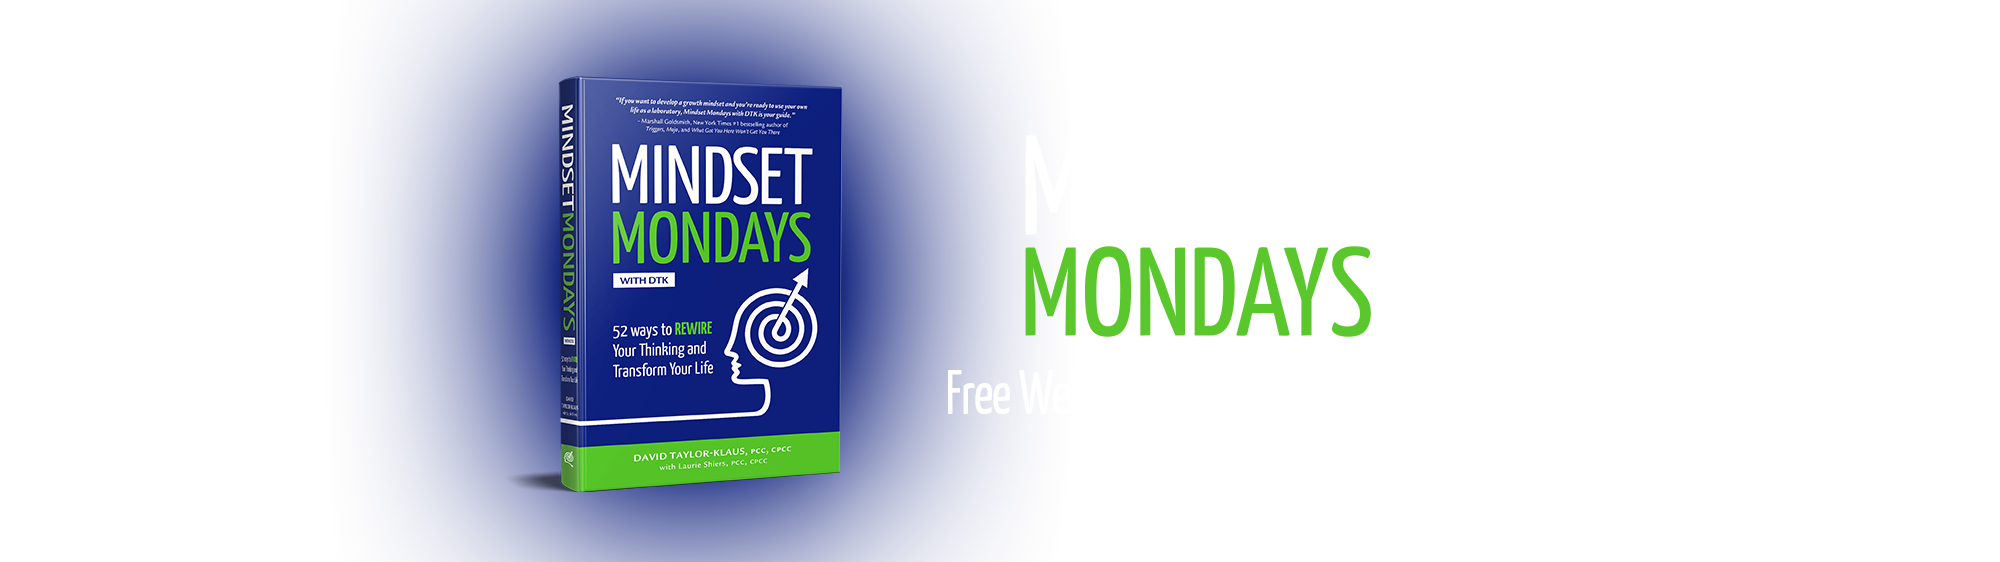 Mindset Mondays Accelerator - free weekly engagement series